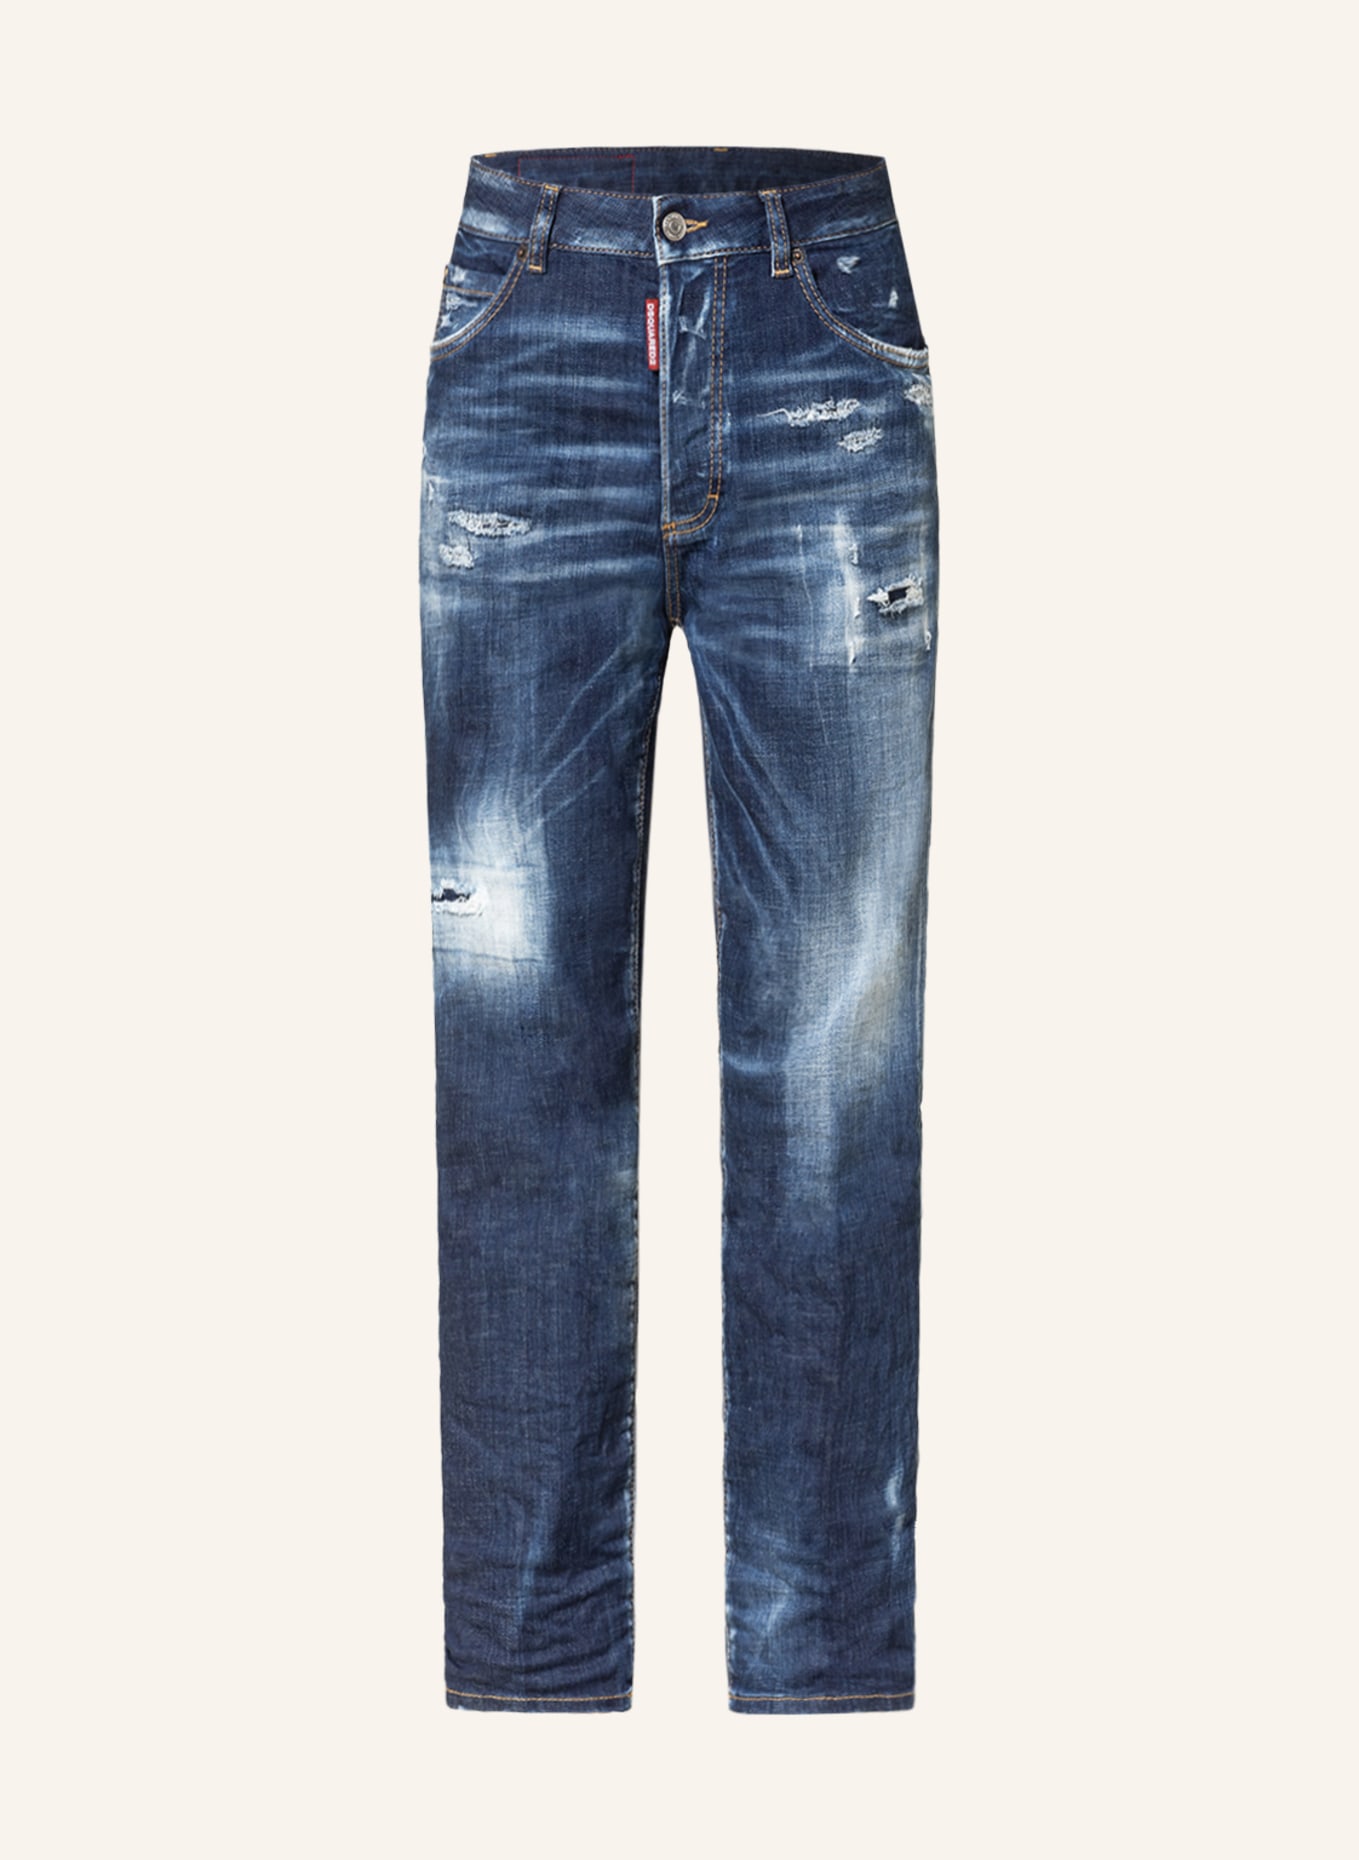 DSQUARED2 Jeans BOSTON, Farbe: 470 NAVY BLUE (Bild 1)